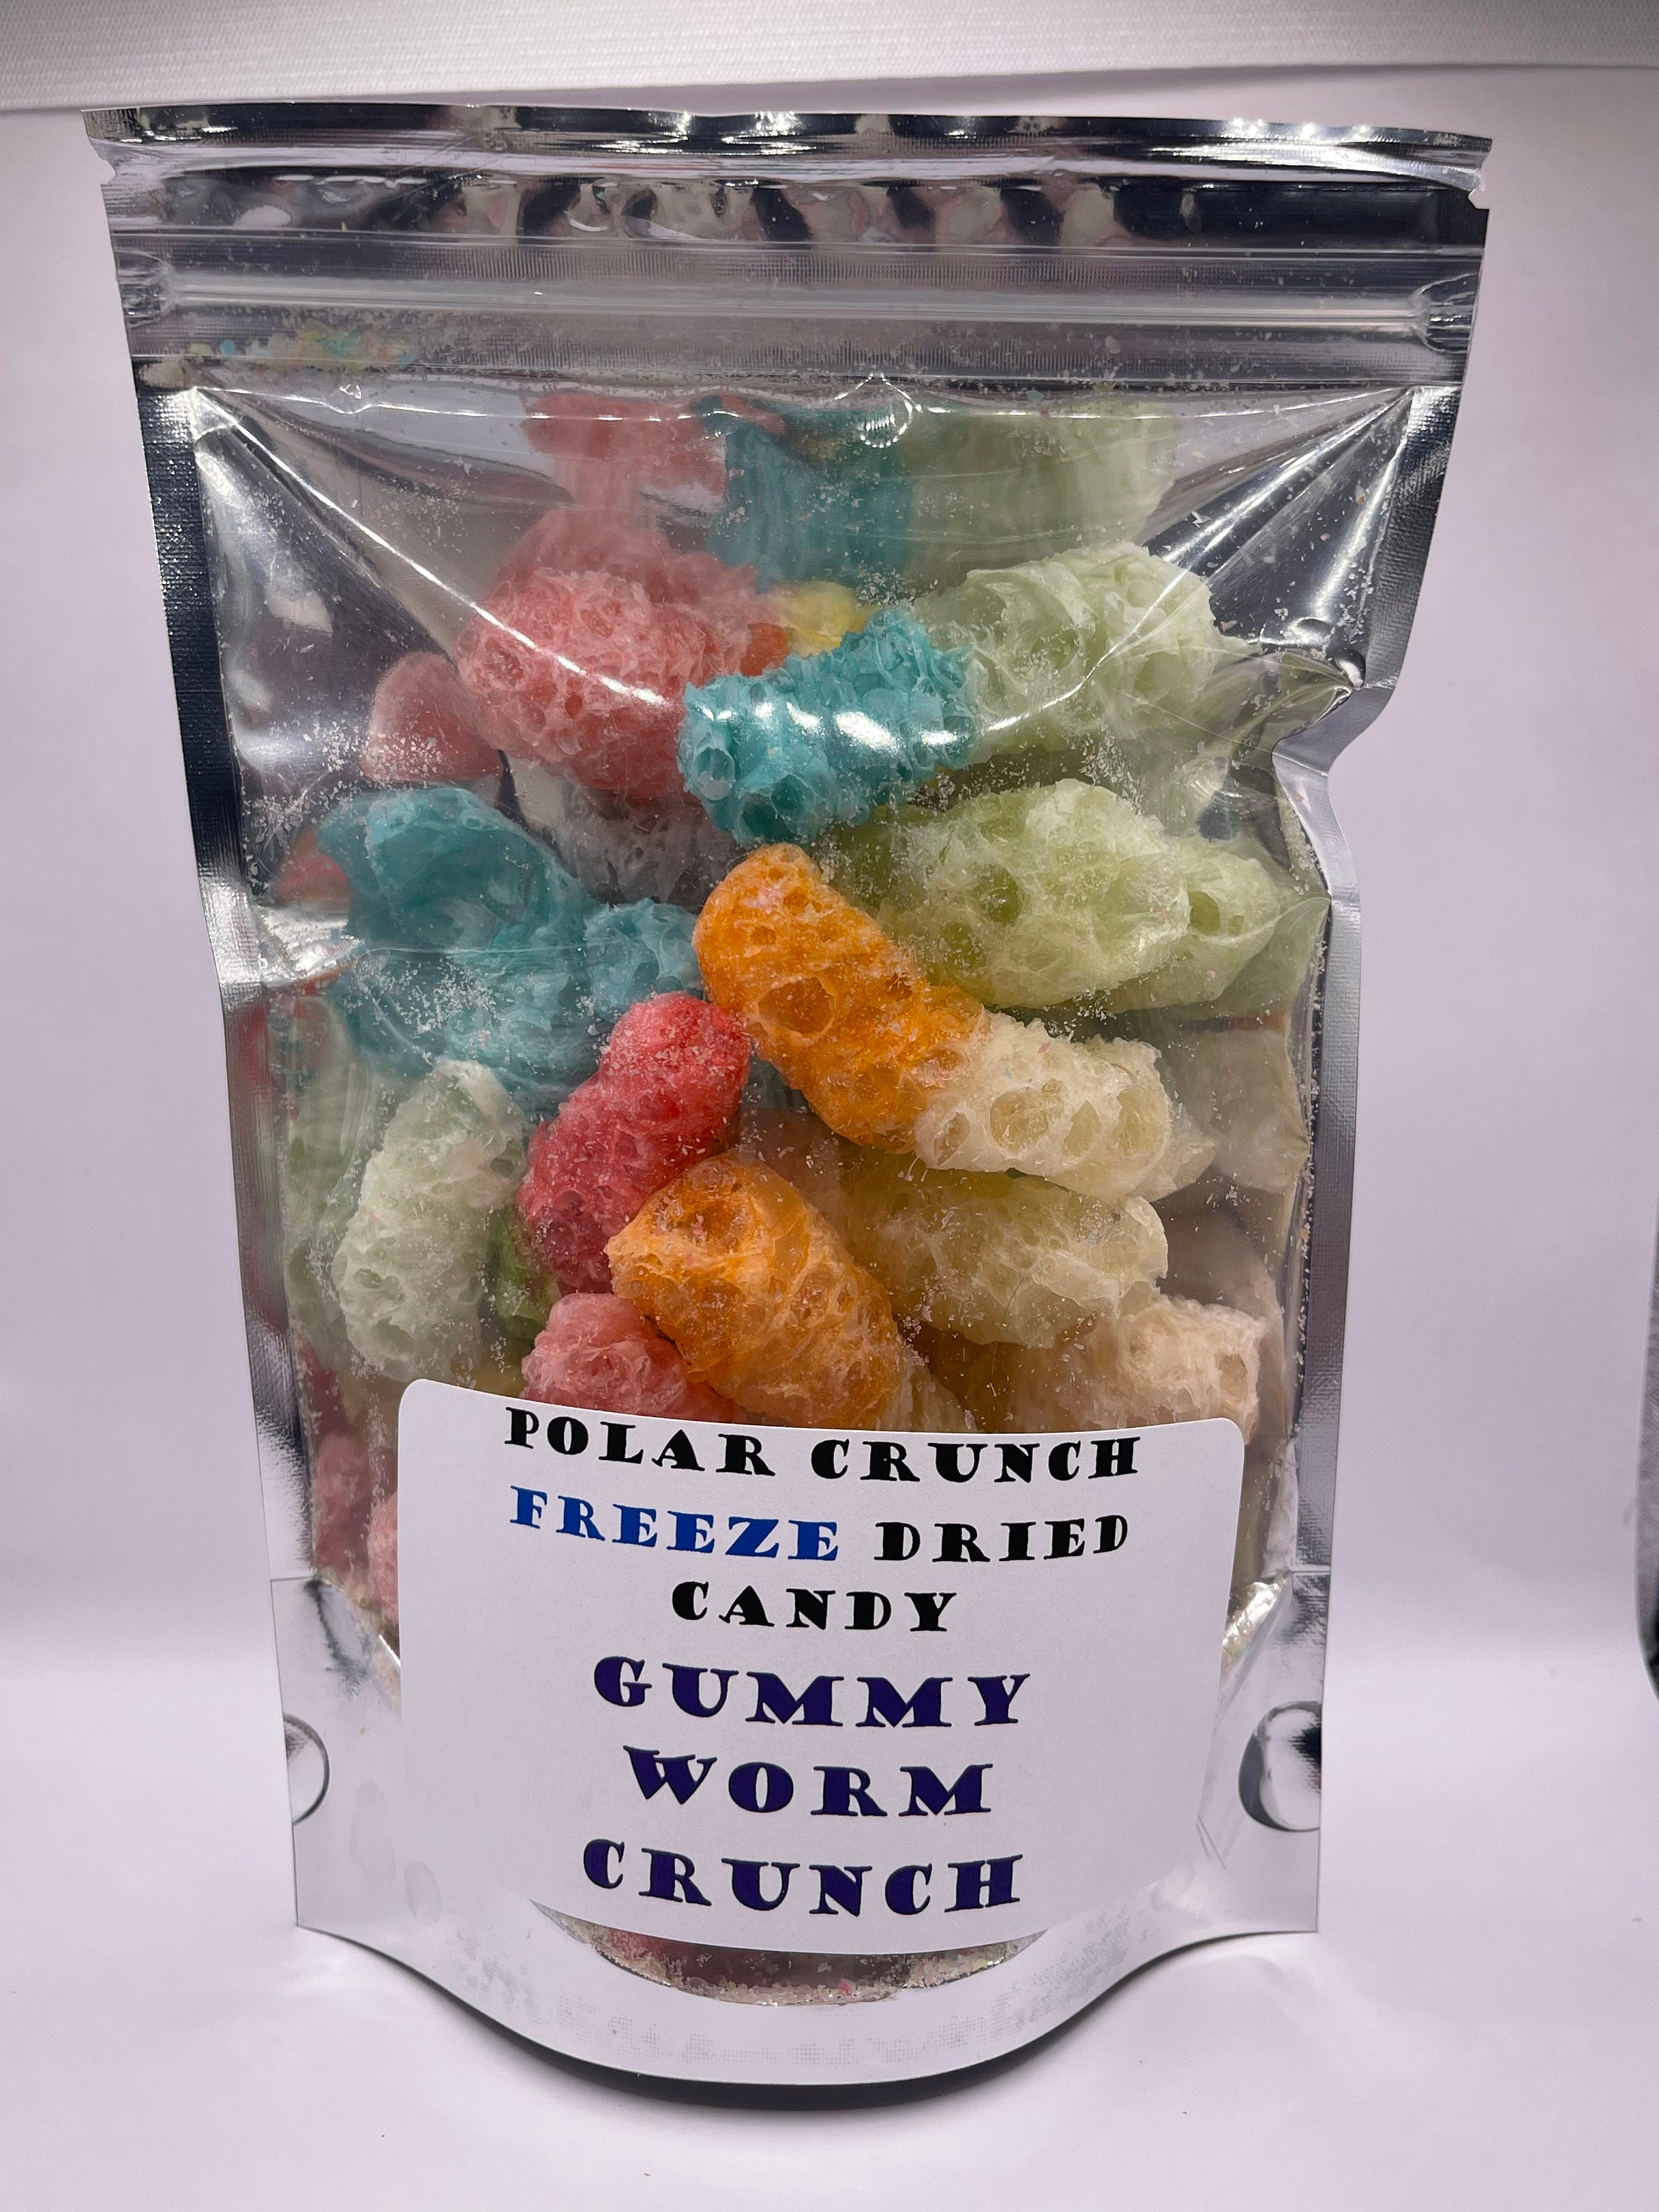  Premium Freeze Dried Skittles - 1 Pound Cosmic